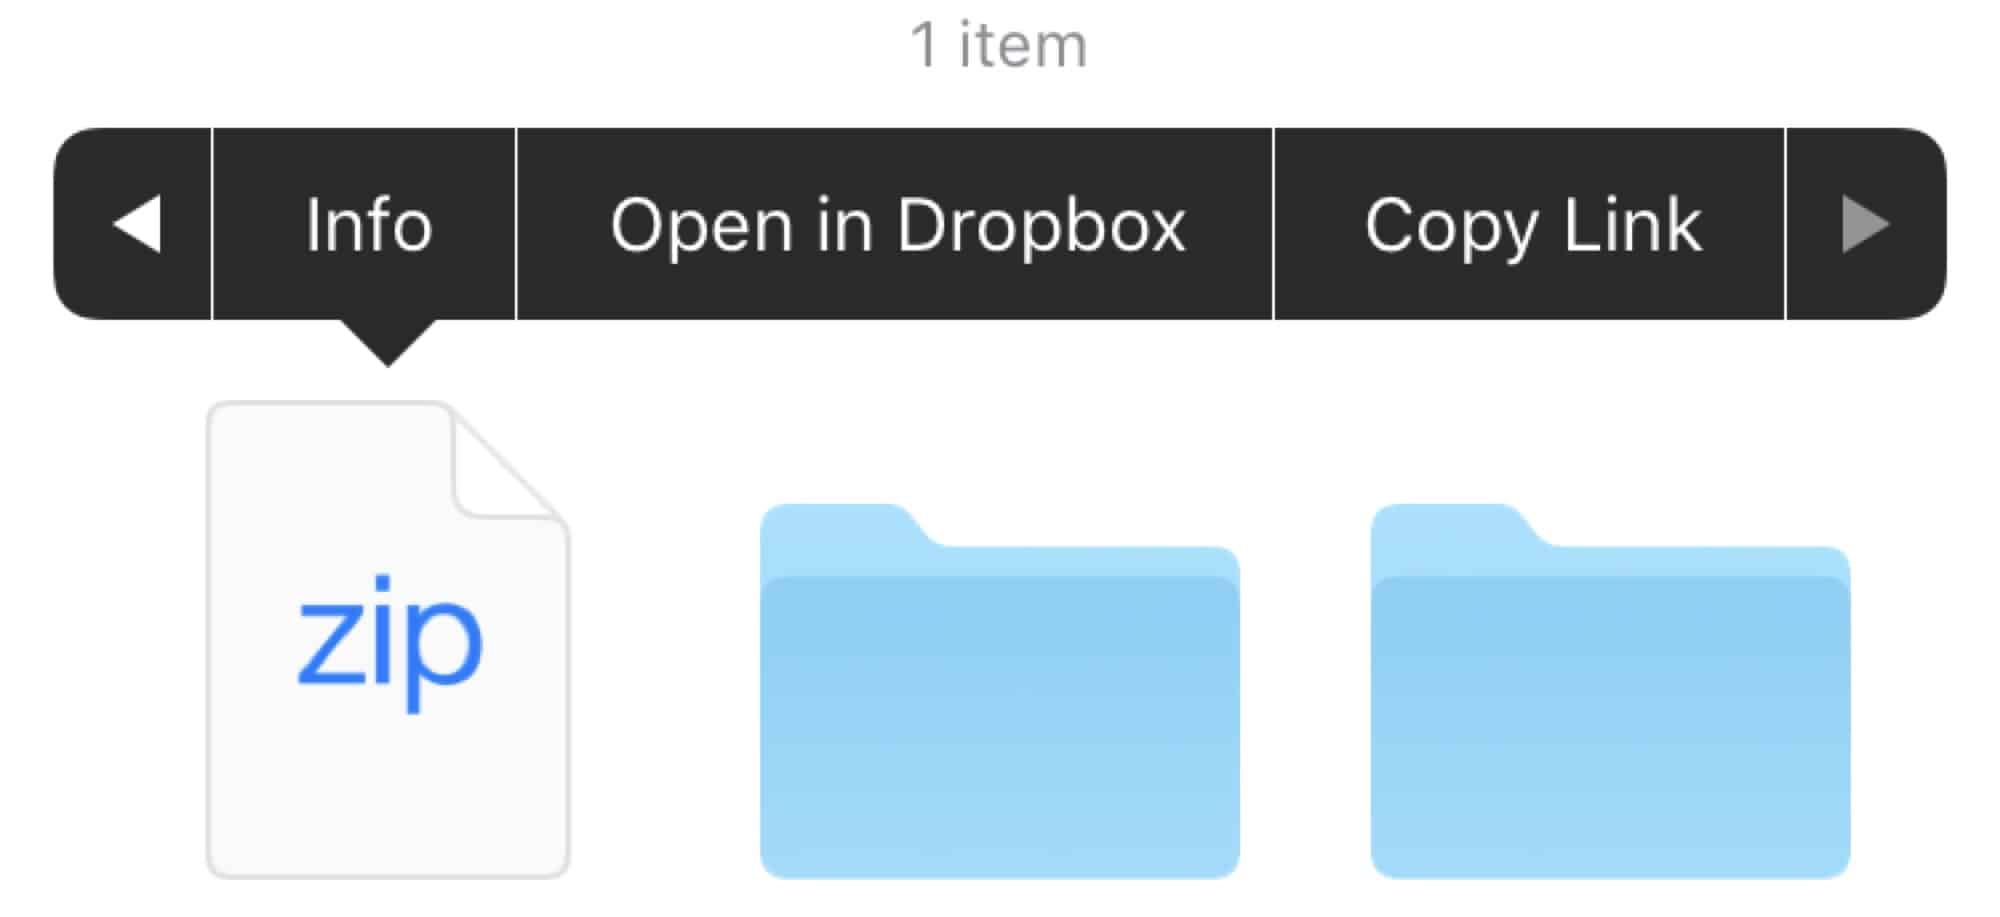 Swiping the Dropbox menu brings up these sharing options.